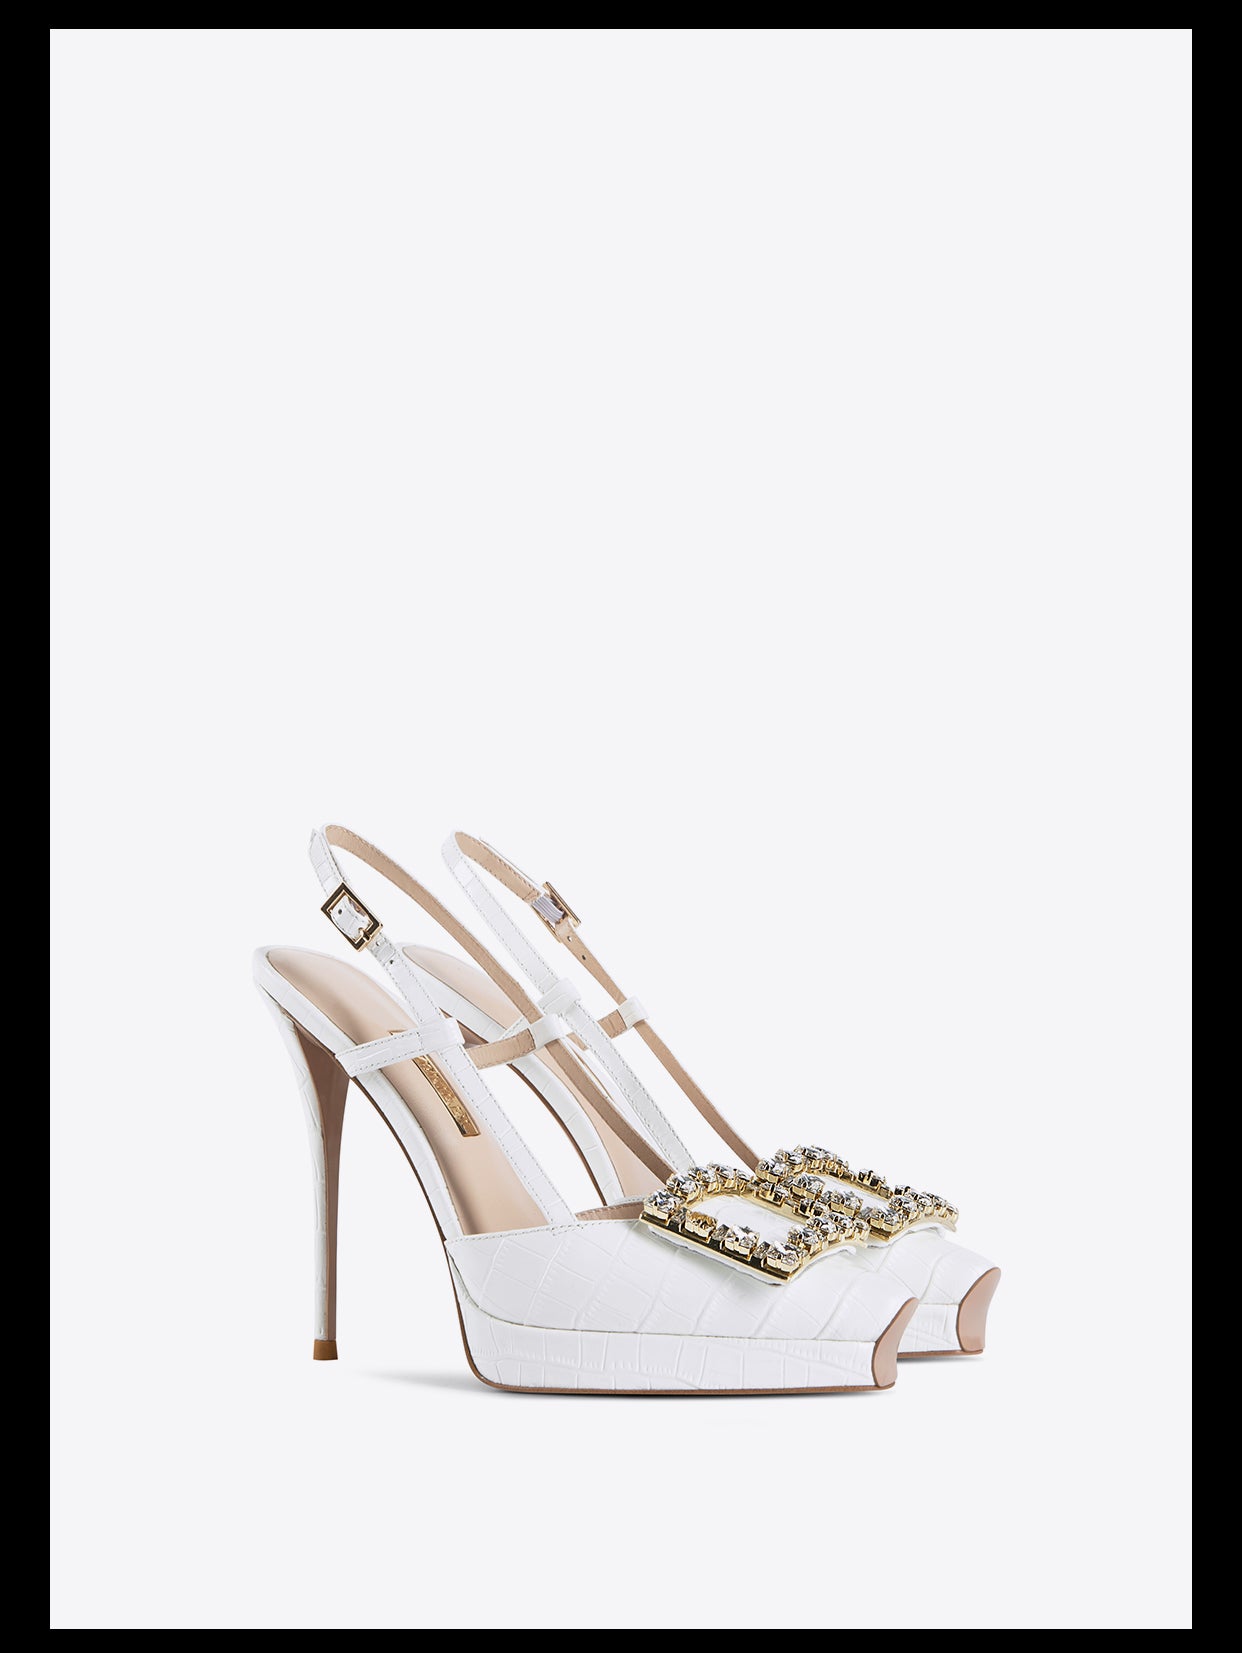 Gorgeous rhinestone square buckle black stiletto high heel sling back shoes pumps - Tabitha